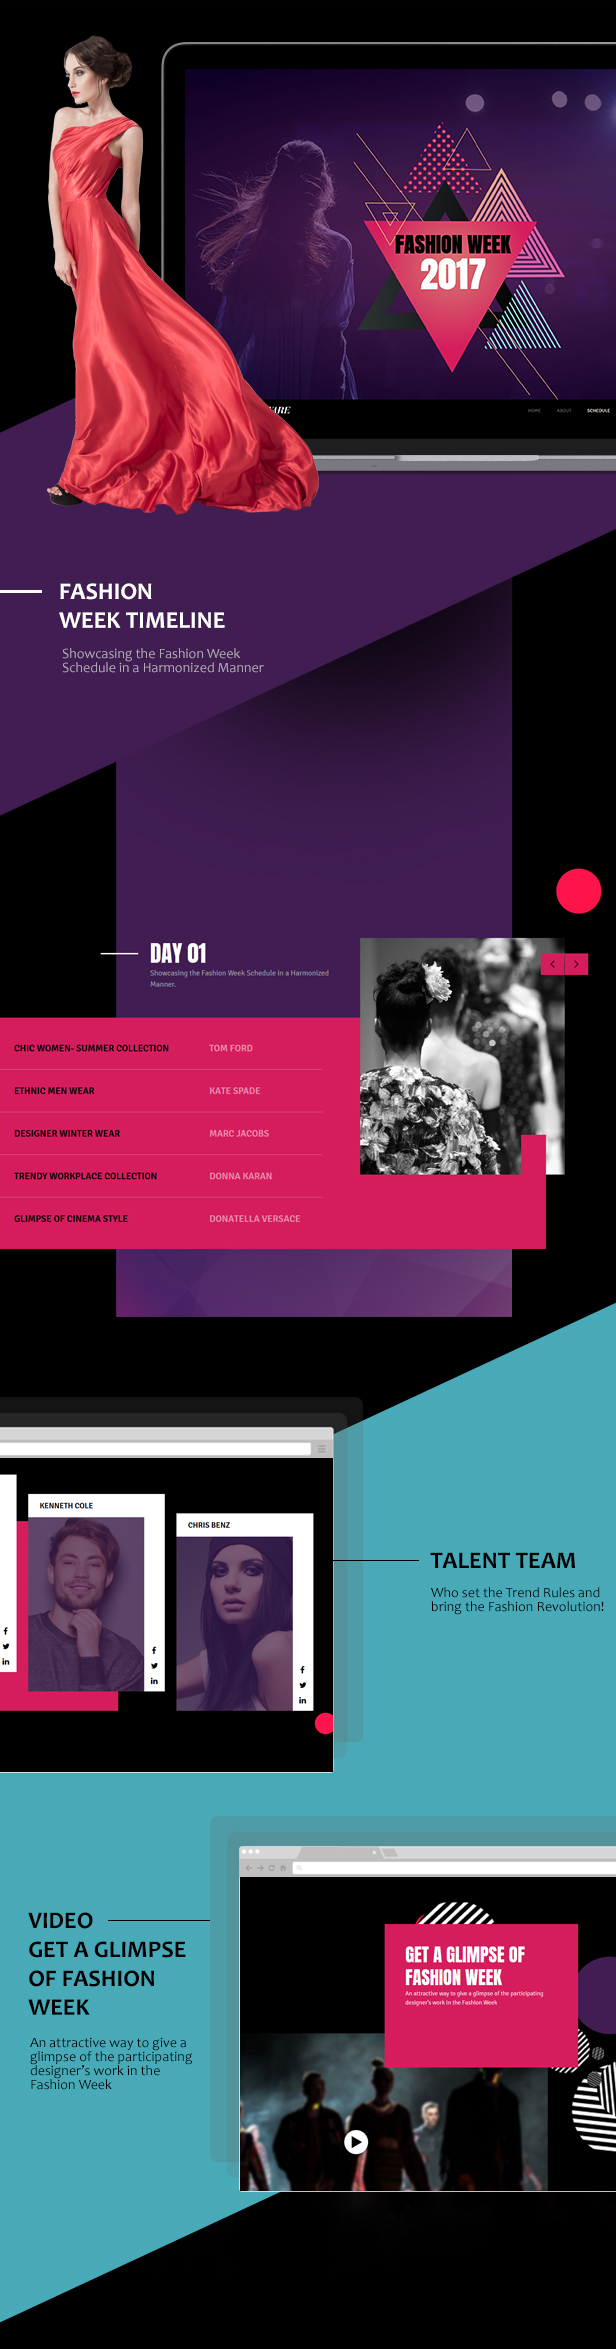 Buzzware - Fashion Week & Beauty Event HTML5 Responsive Website Template - 1